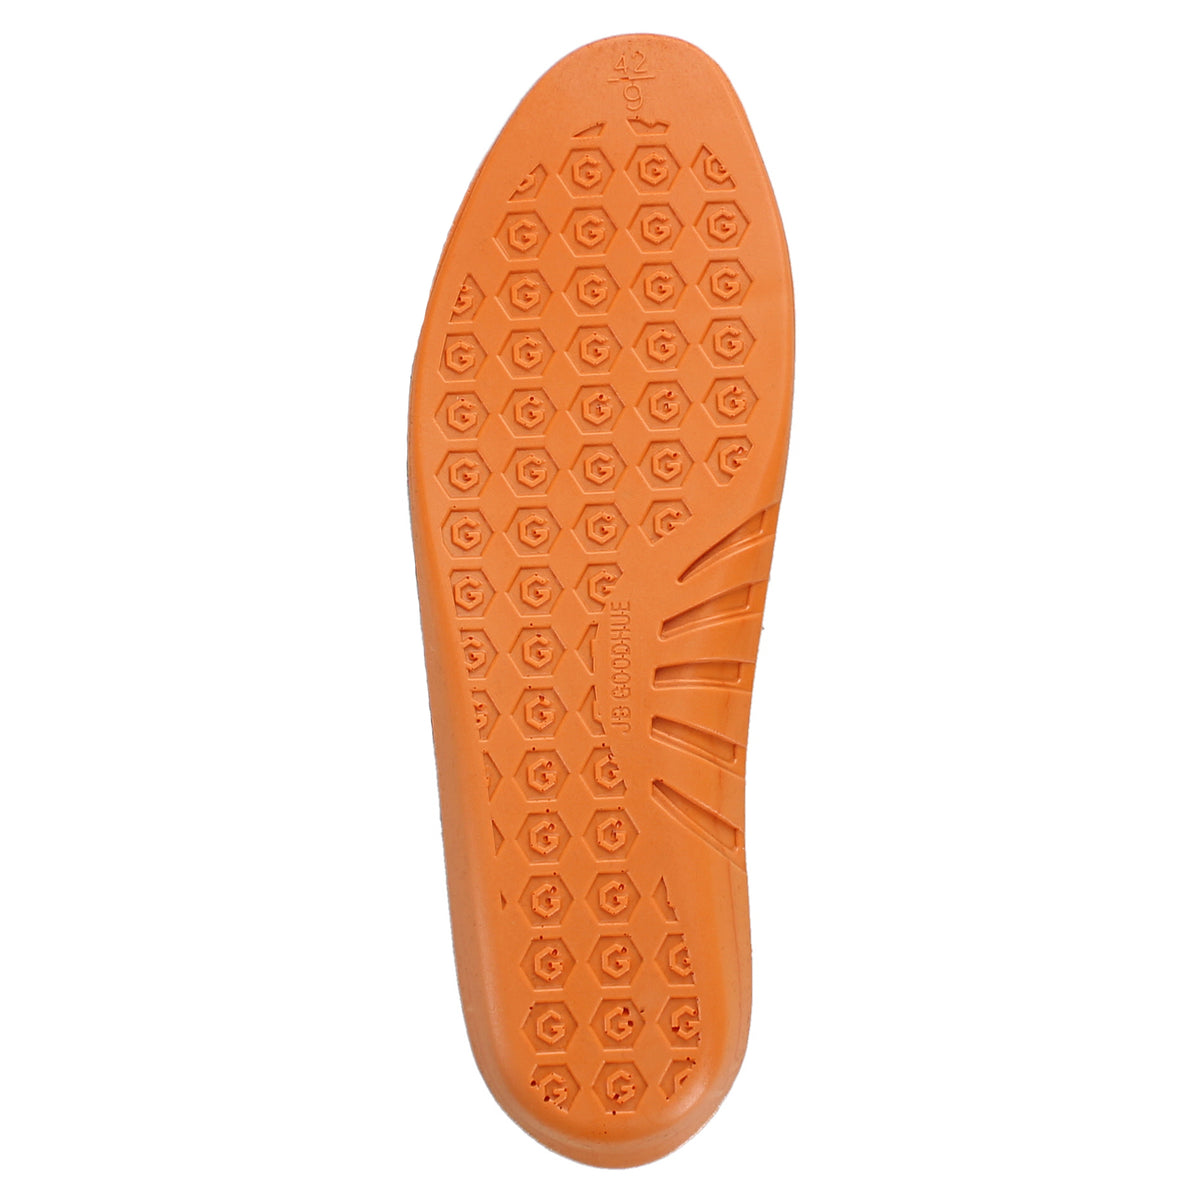 J.B.G Accessories Biowalk Insoles 40201 Orange Shoes